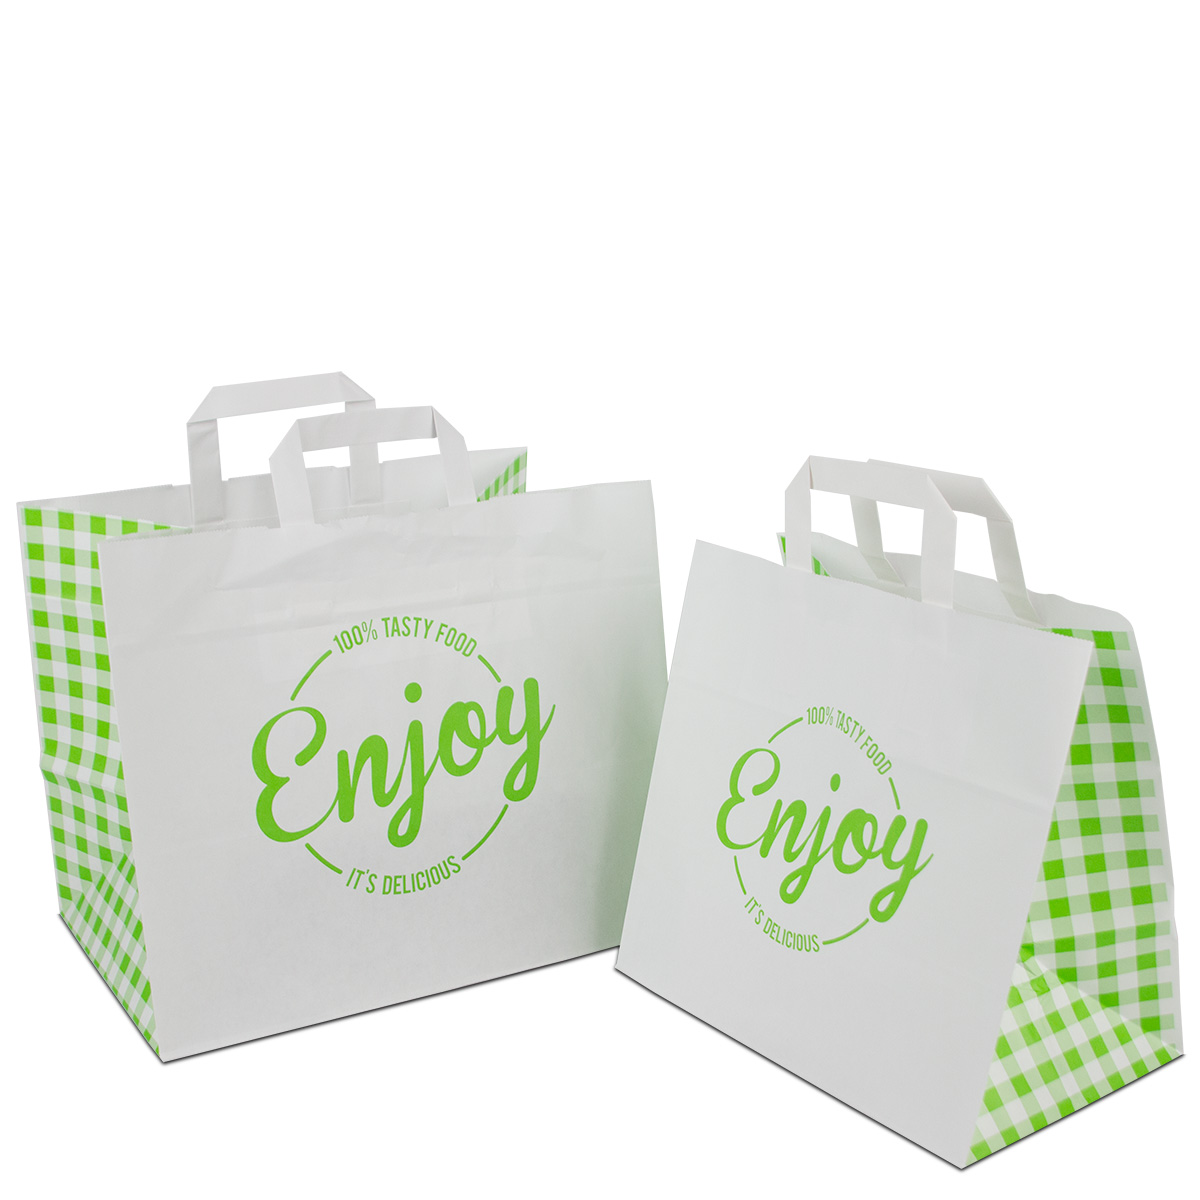 Papieren take away tassen - Enjoy groen